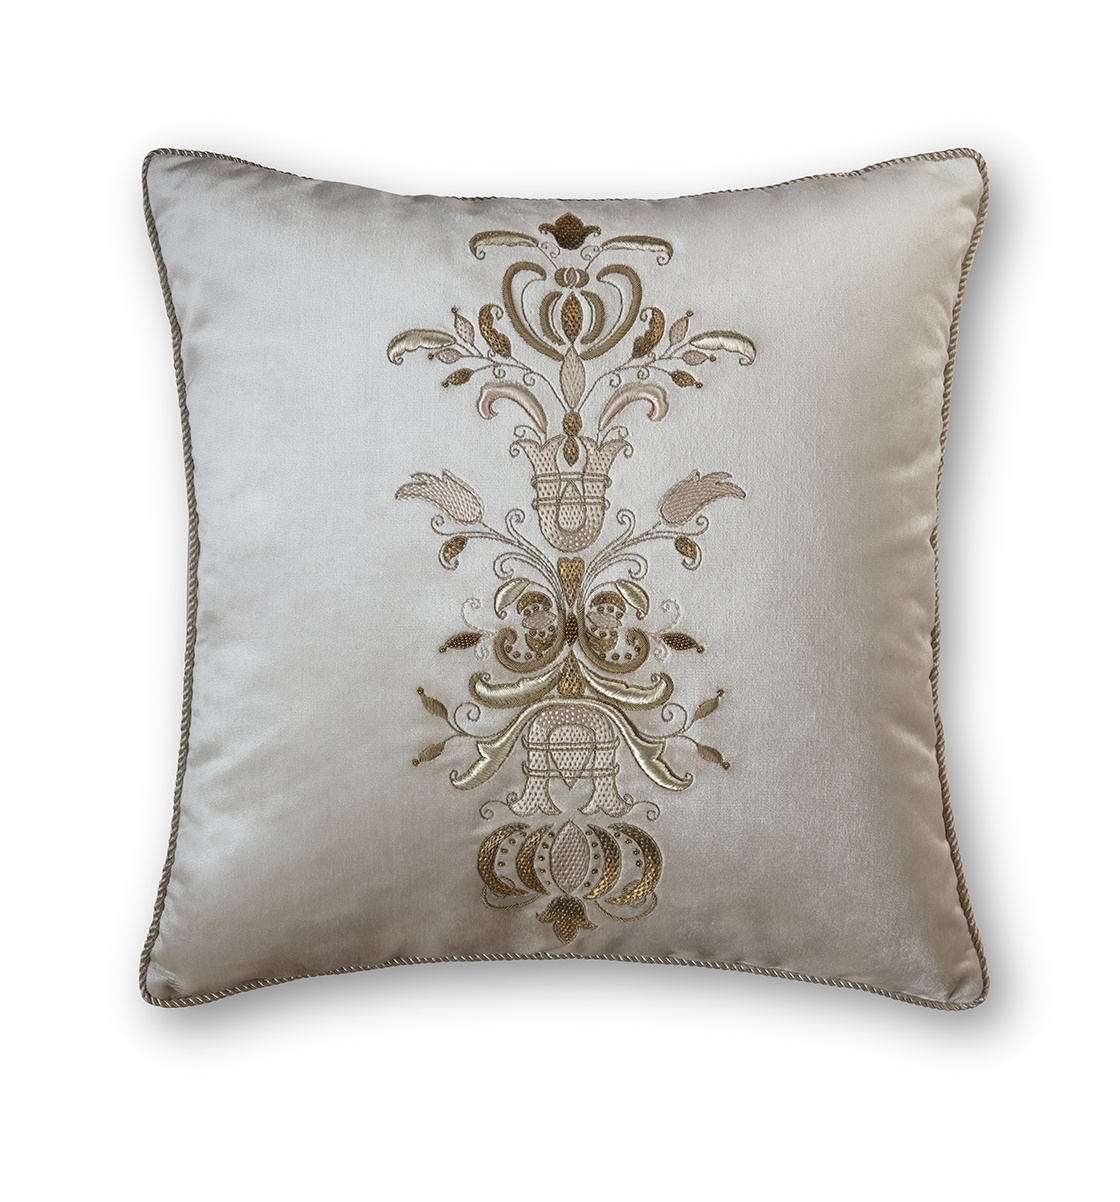 Zola cushion in Capri silk velvet - Vanilla - Beaumont & Fletcher